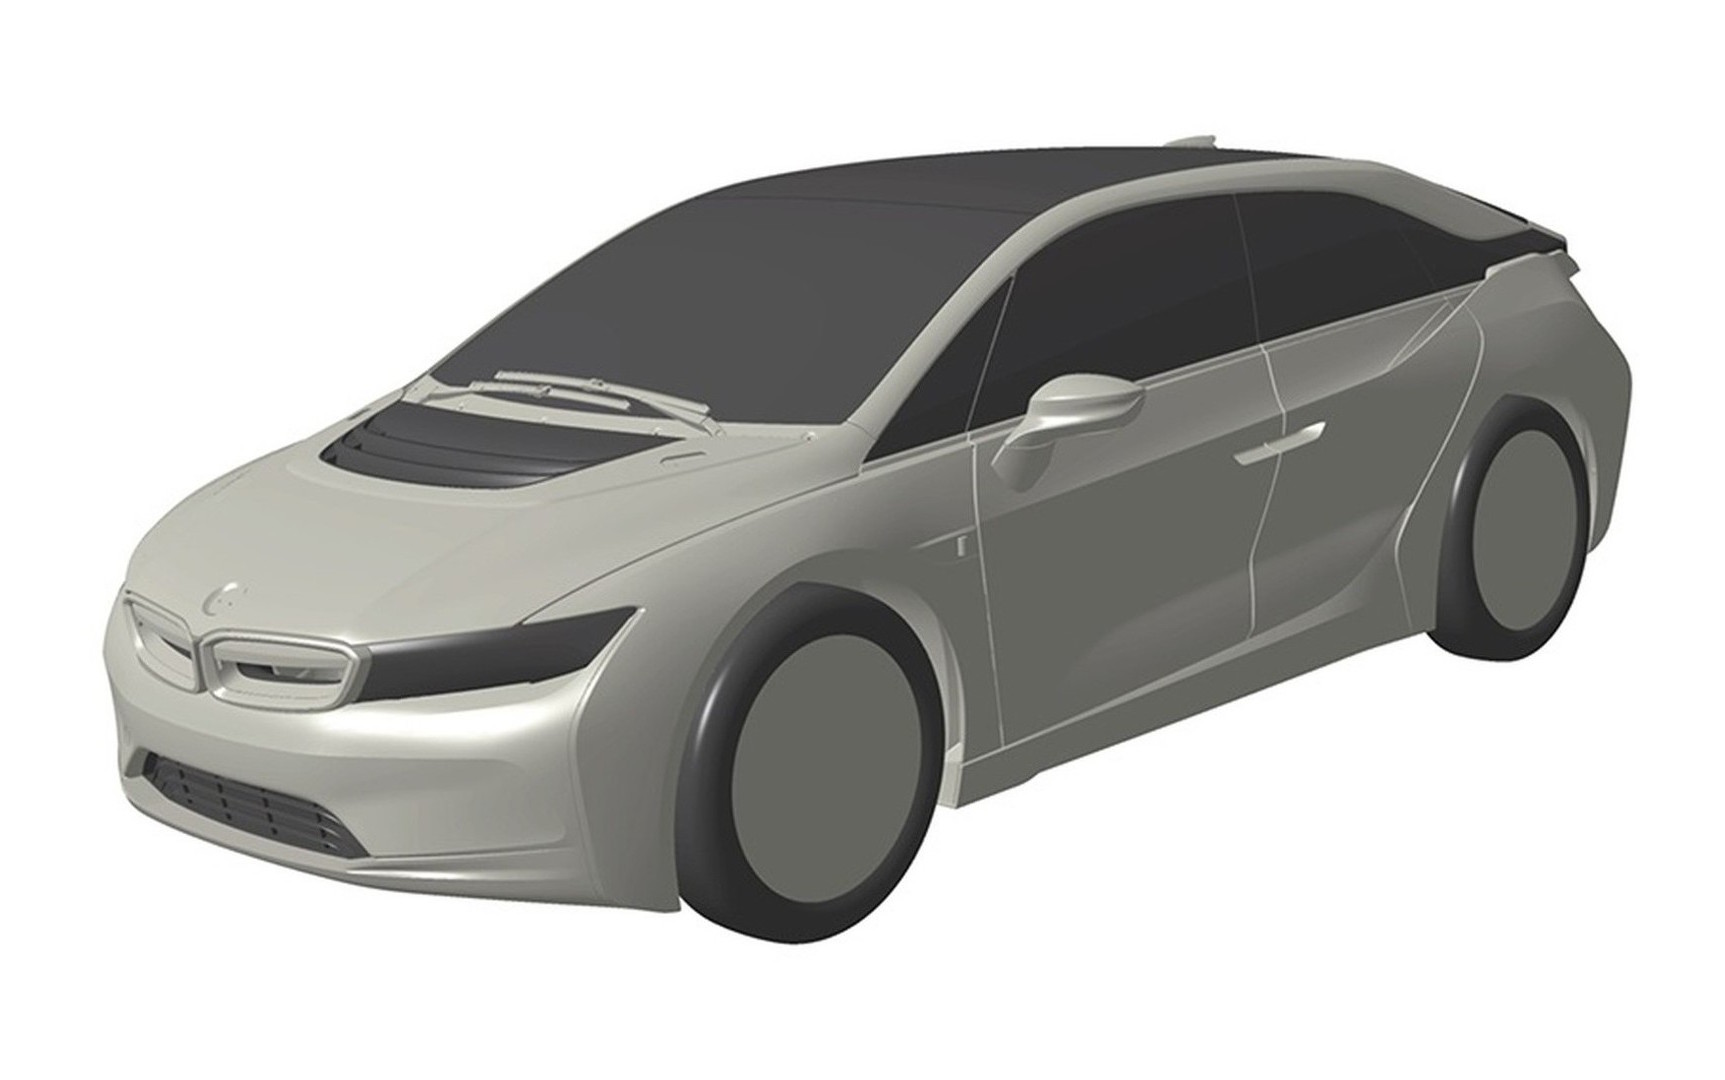 BMW ‘i5’ patent images show potential design